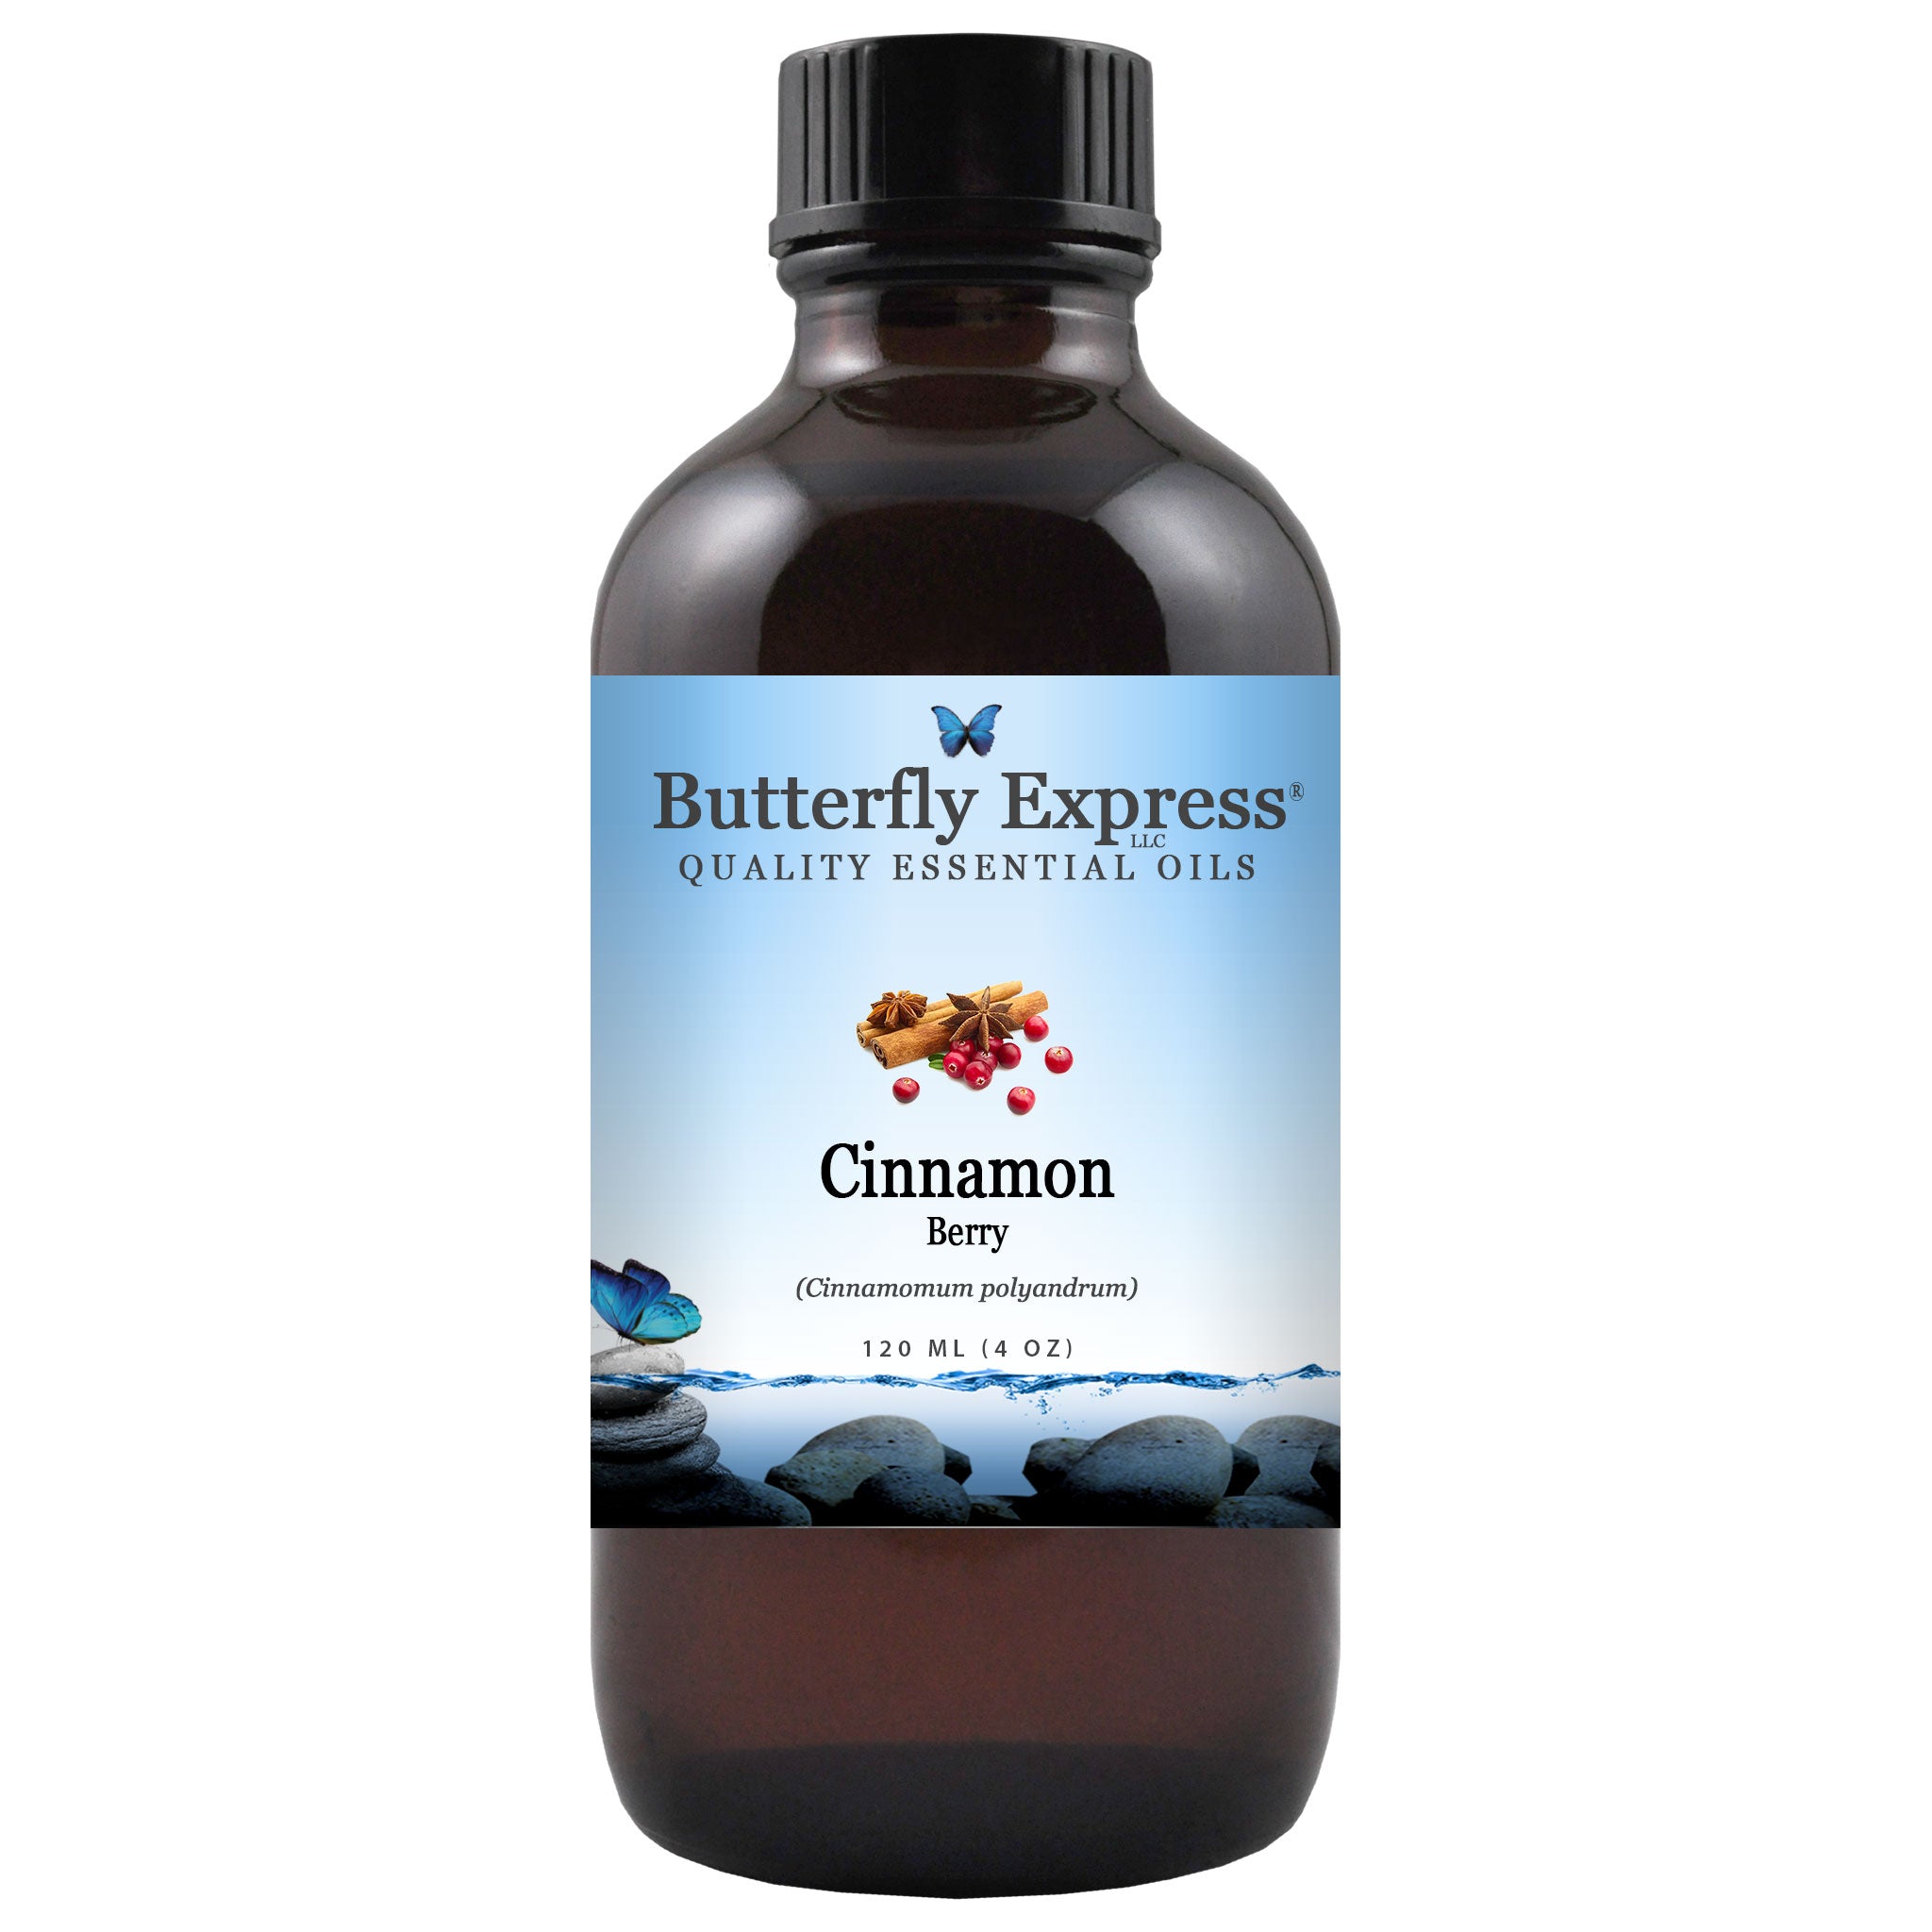 Cinnamon Essential Oil, 4 oz